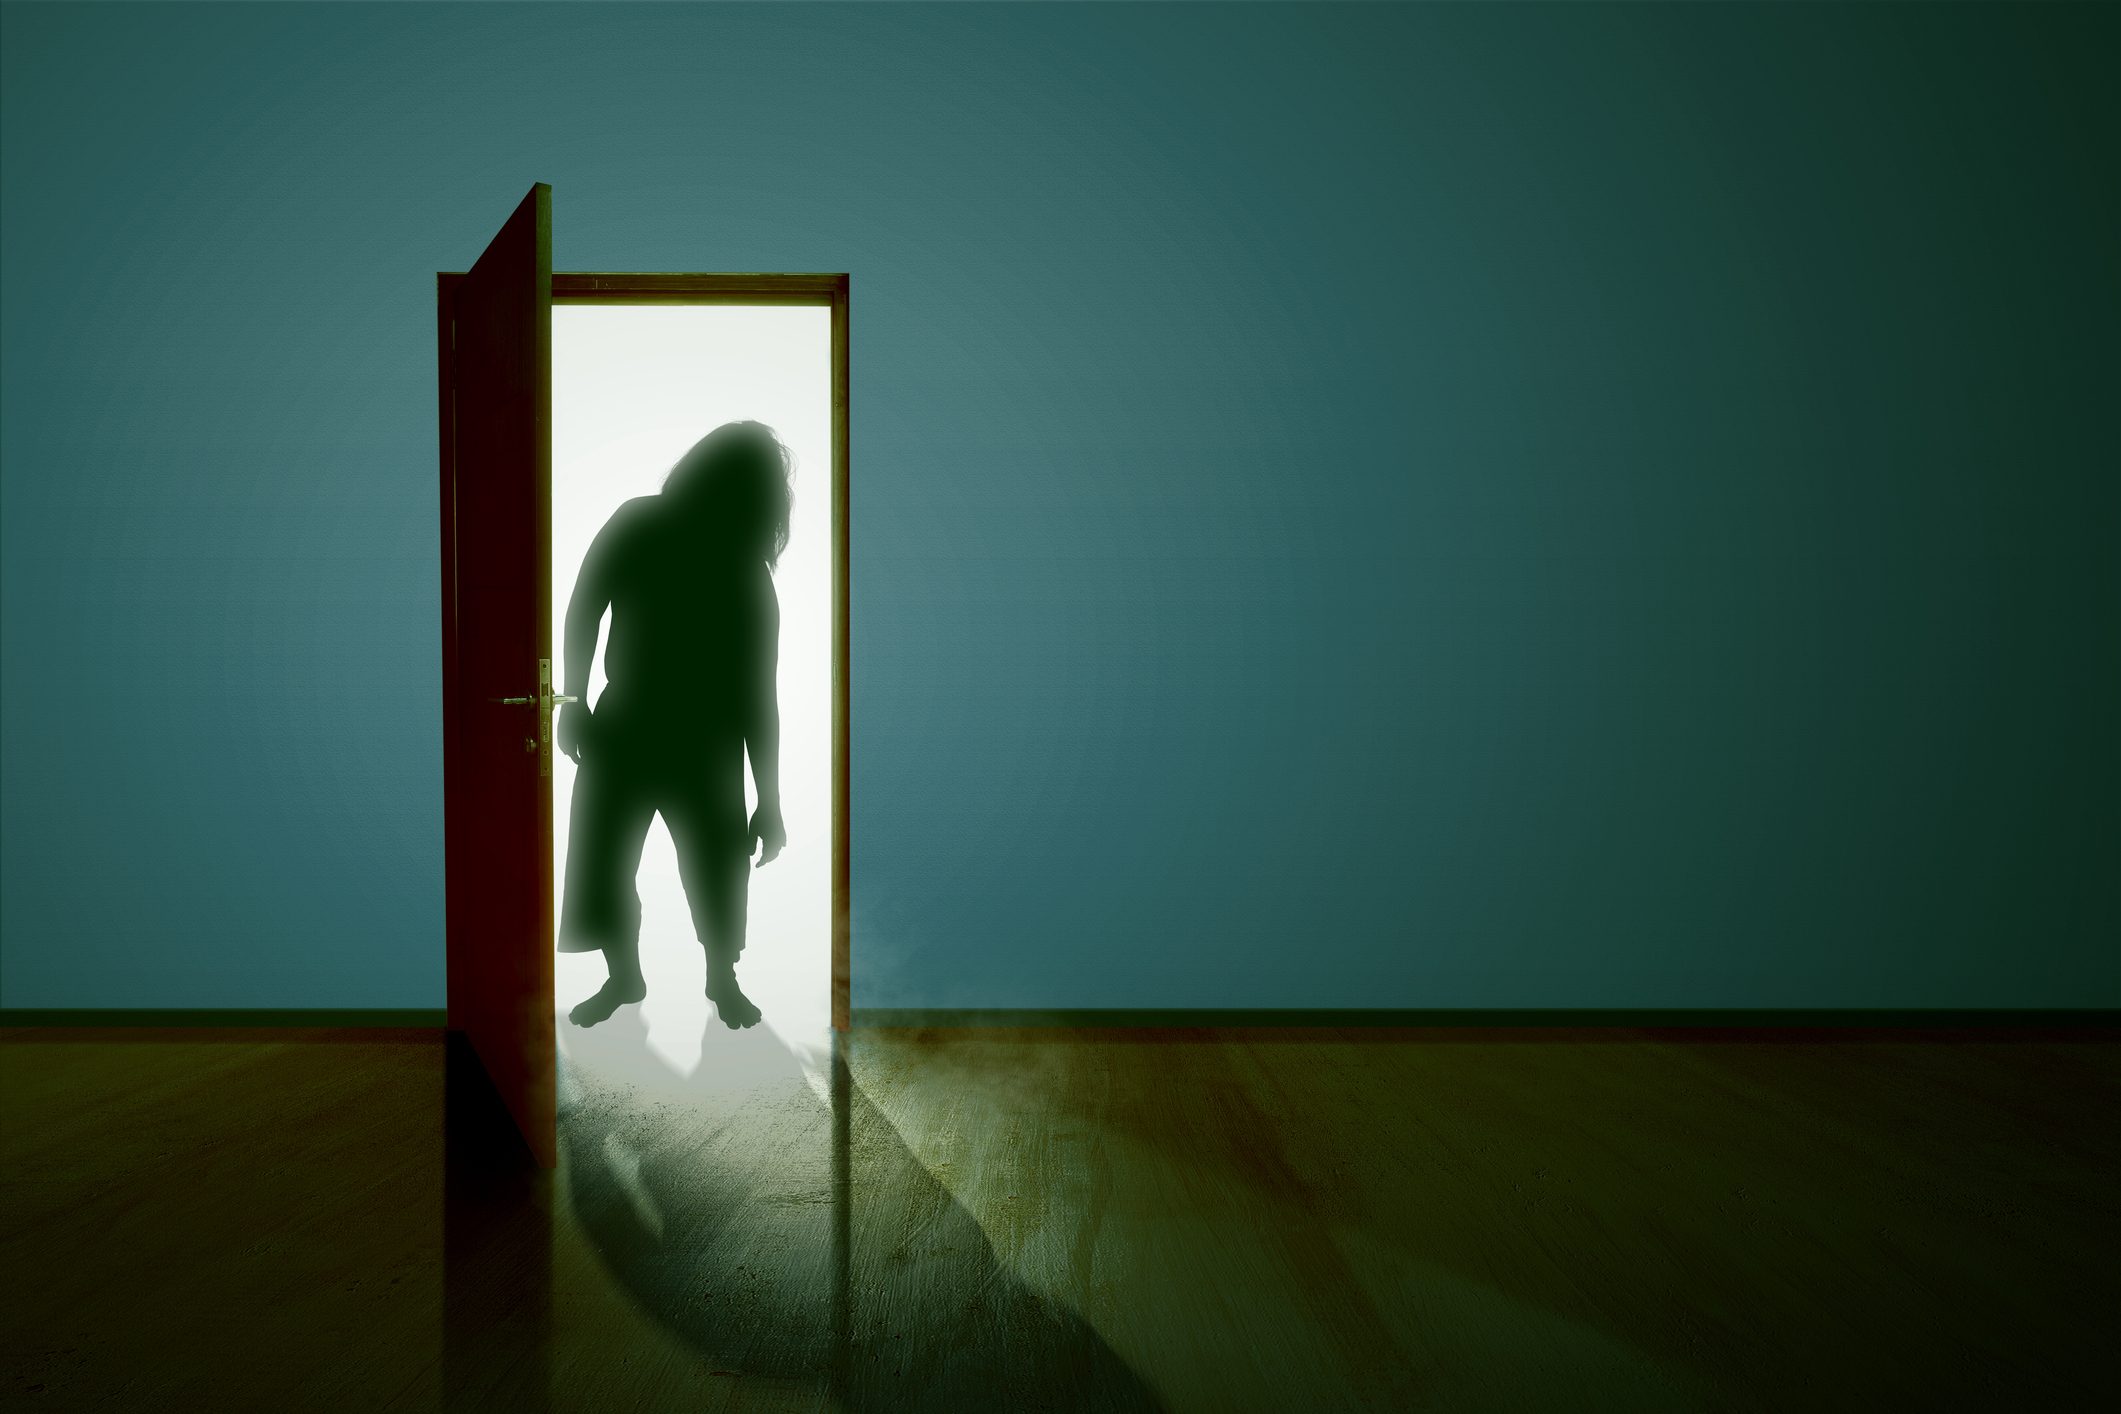 silhouette-of-zombie-standing-on-the-opened-door-1257190405_2125x1416